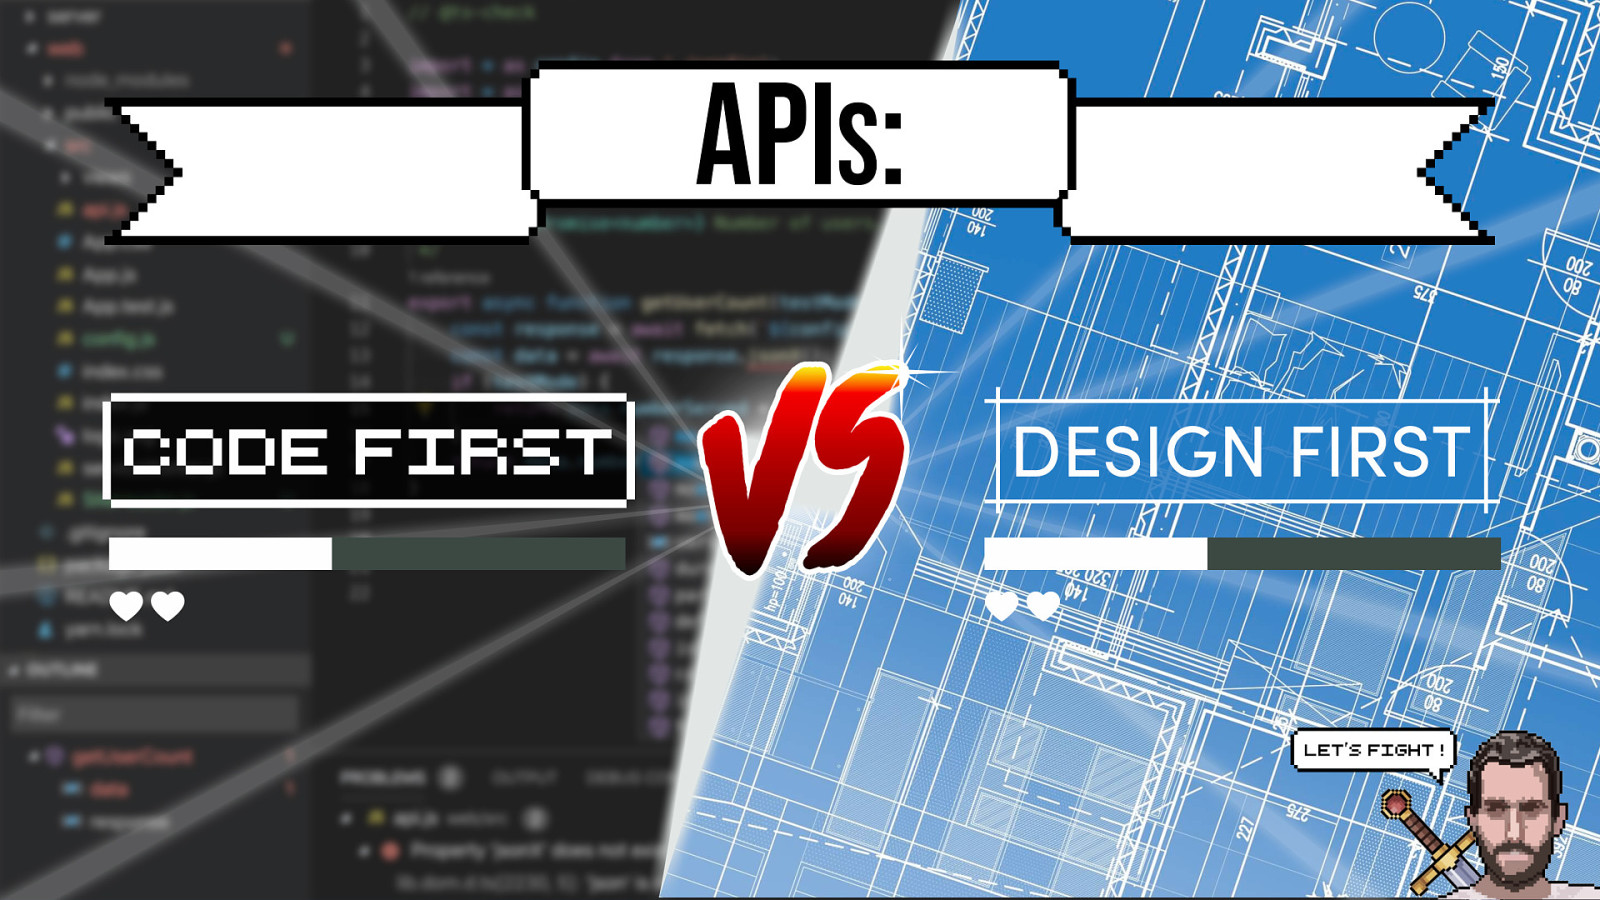 APIs: Code first VS Design first